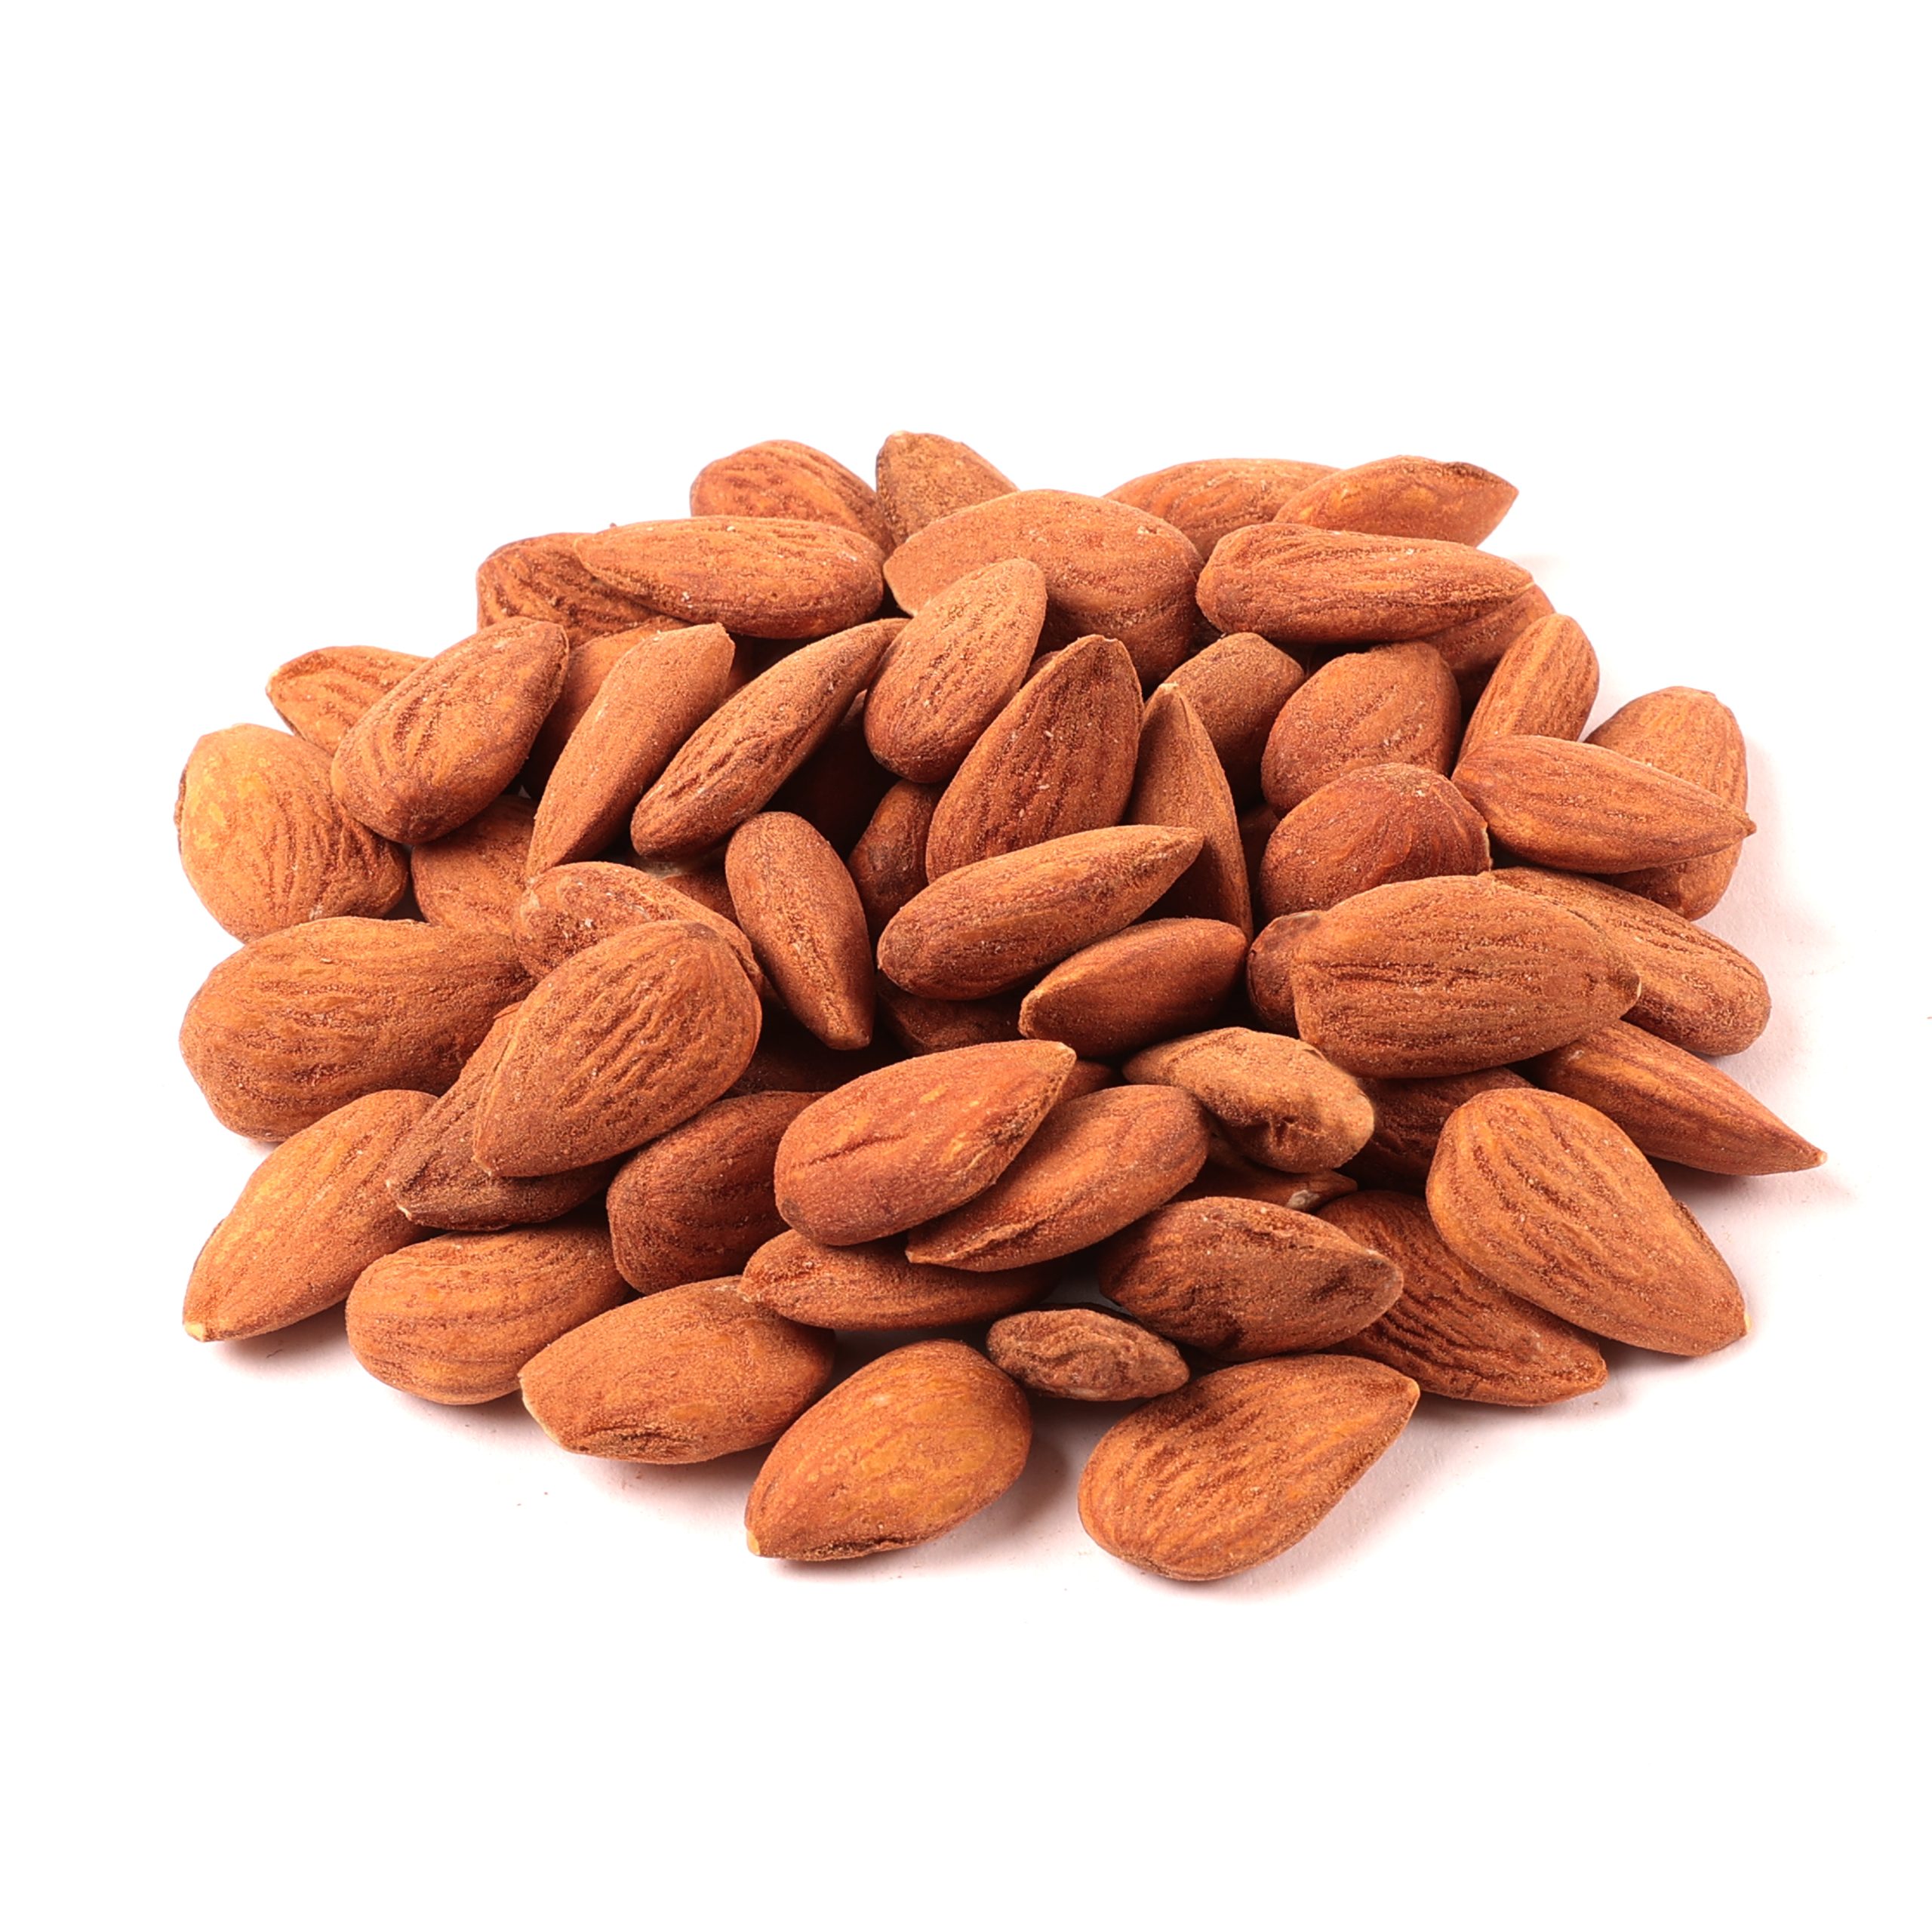 Dorri - Organic Whole Natural Almonds (Spanish)